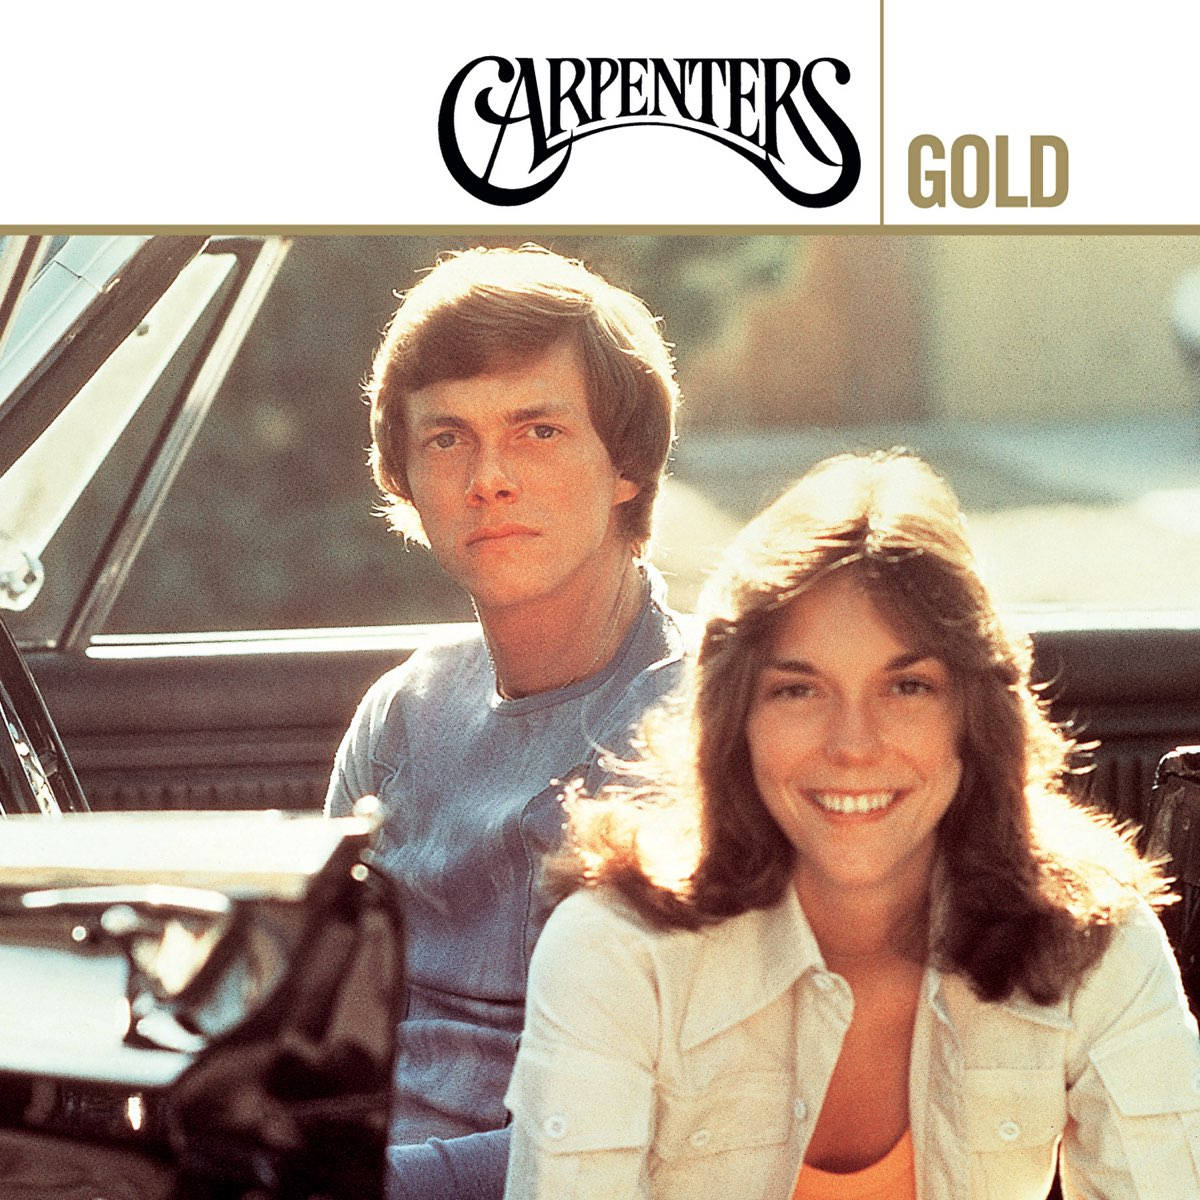 "Carpenters Gold Compilation Album Cover" Wallpaper